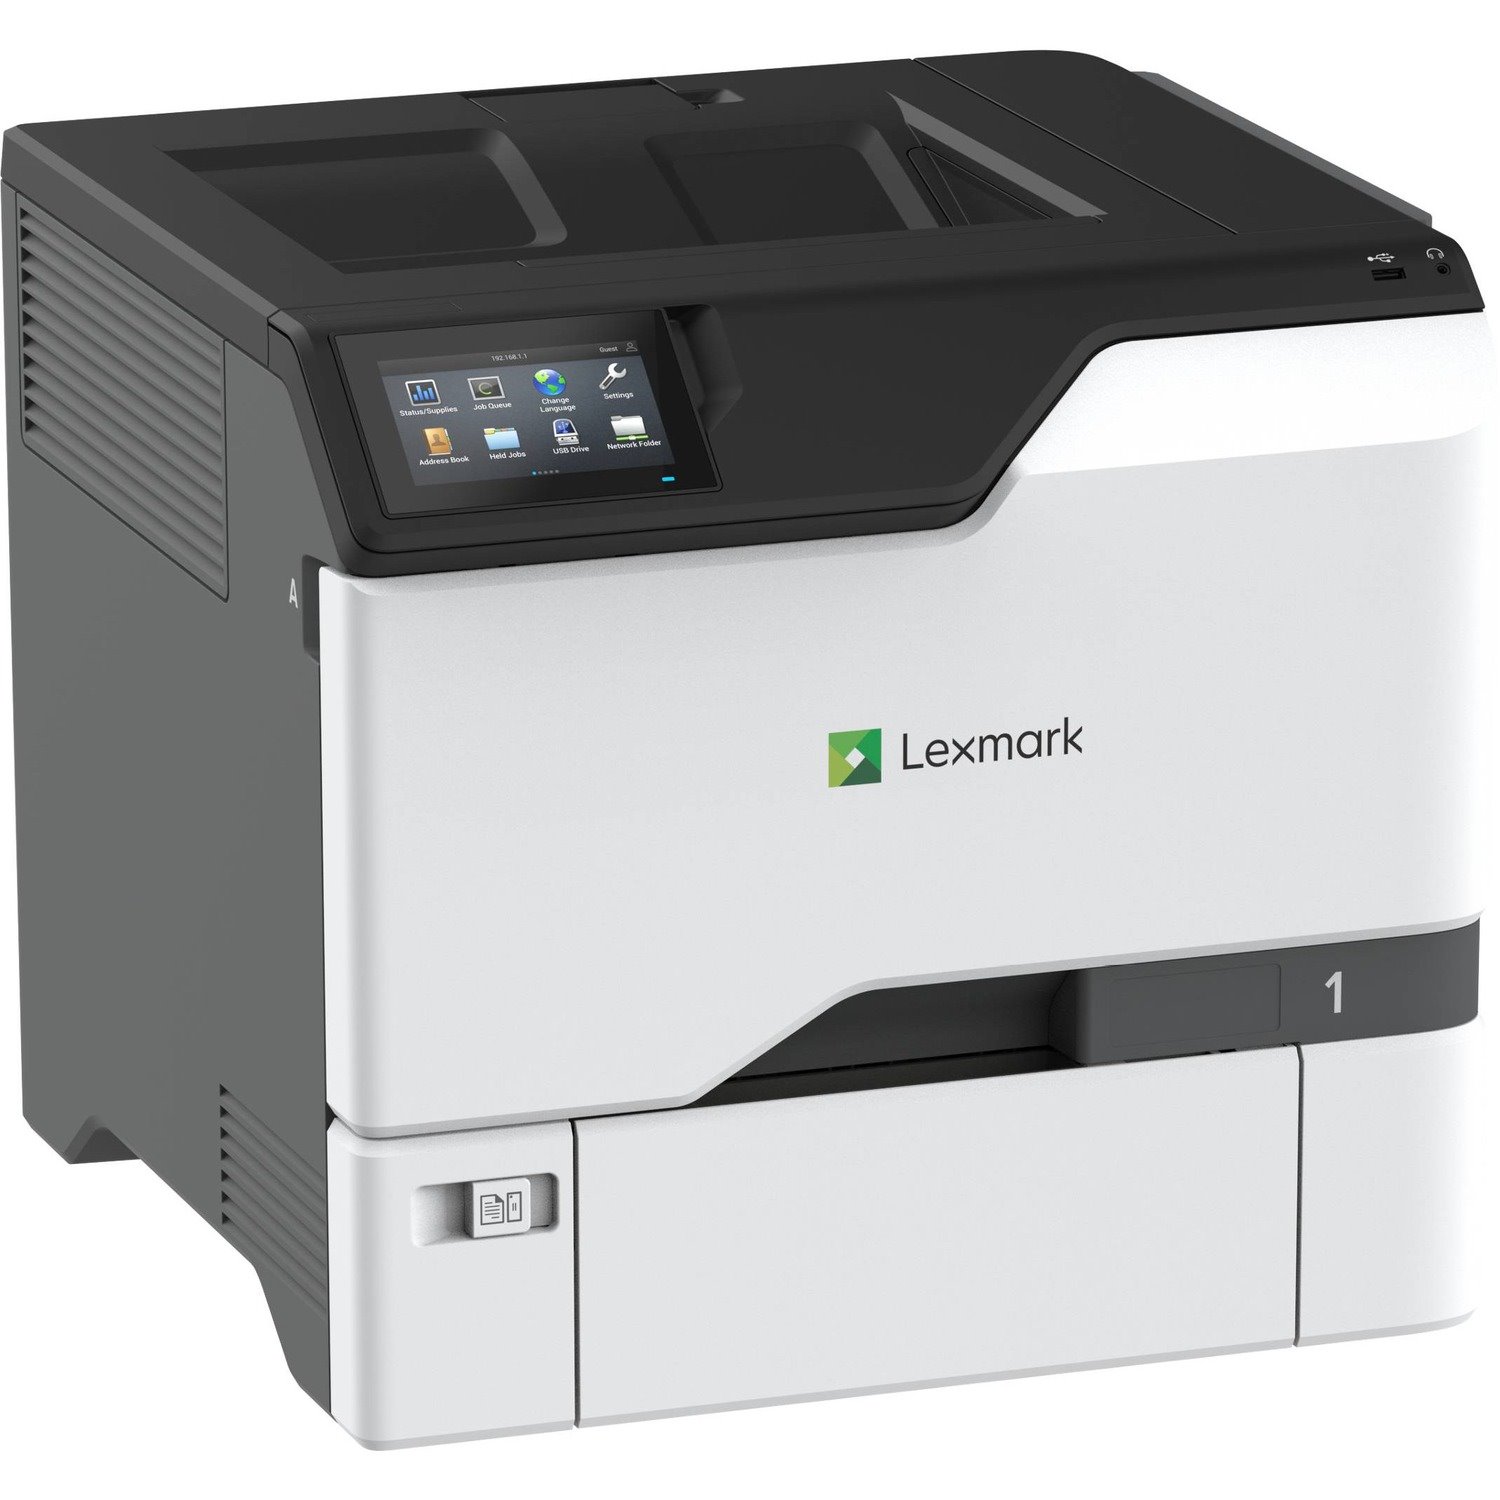 Lexmark CS735de Desktop Laser Printer - Color